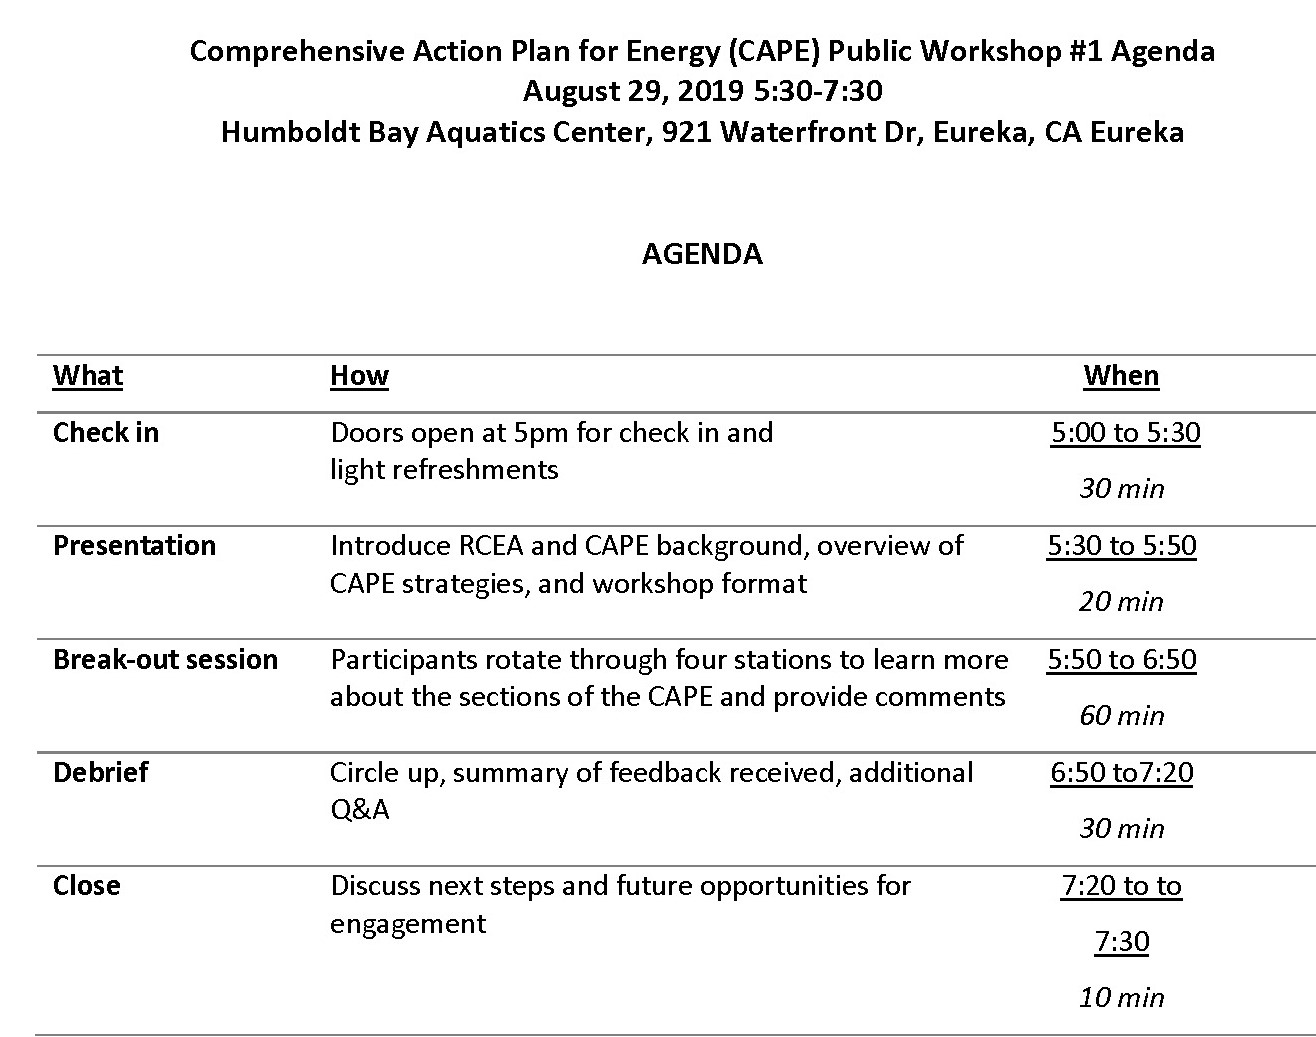 Comprehensive Action Plan for Energy Public Workshop agenda